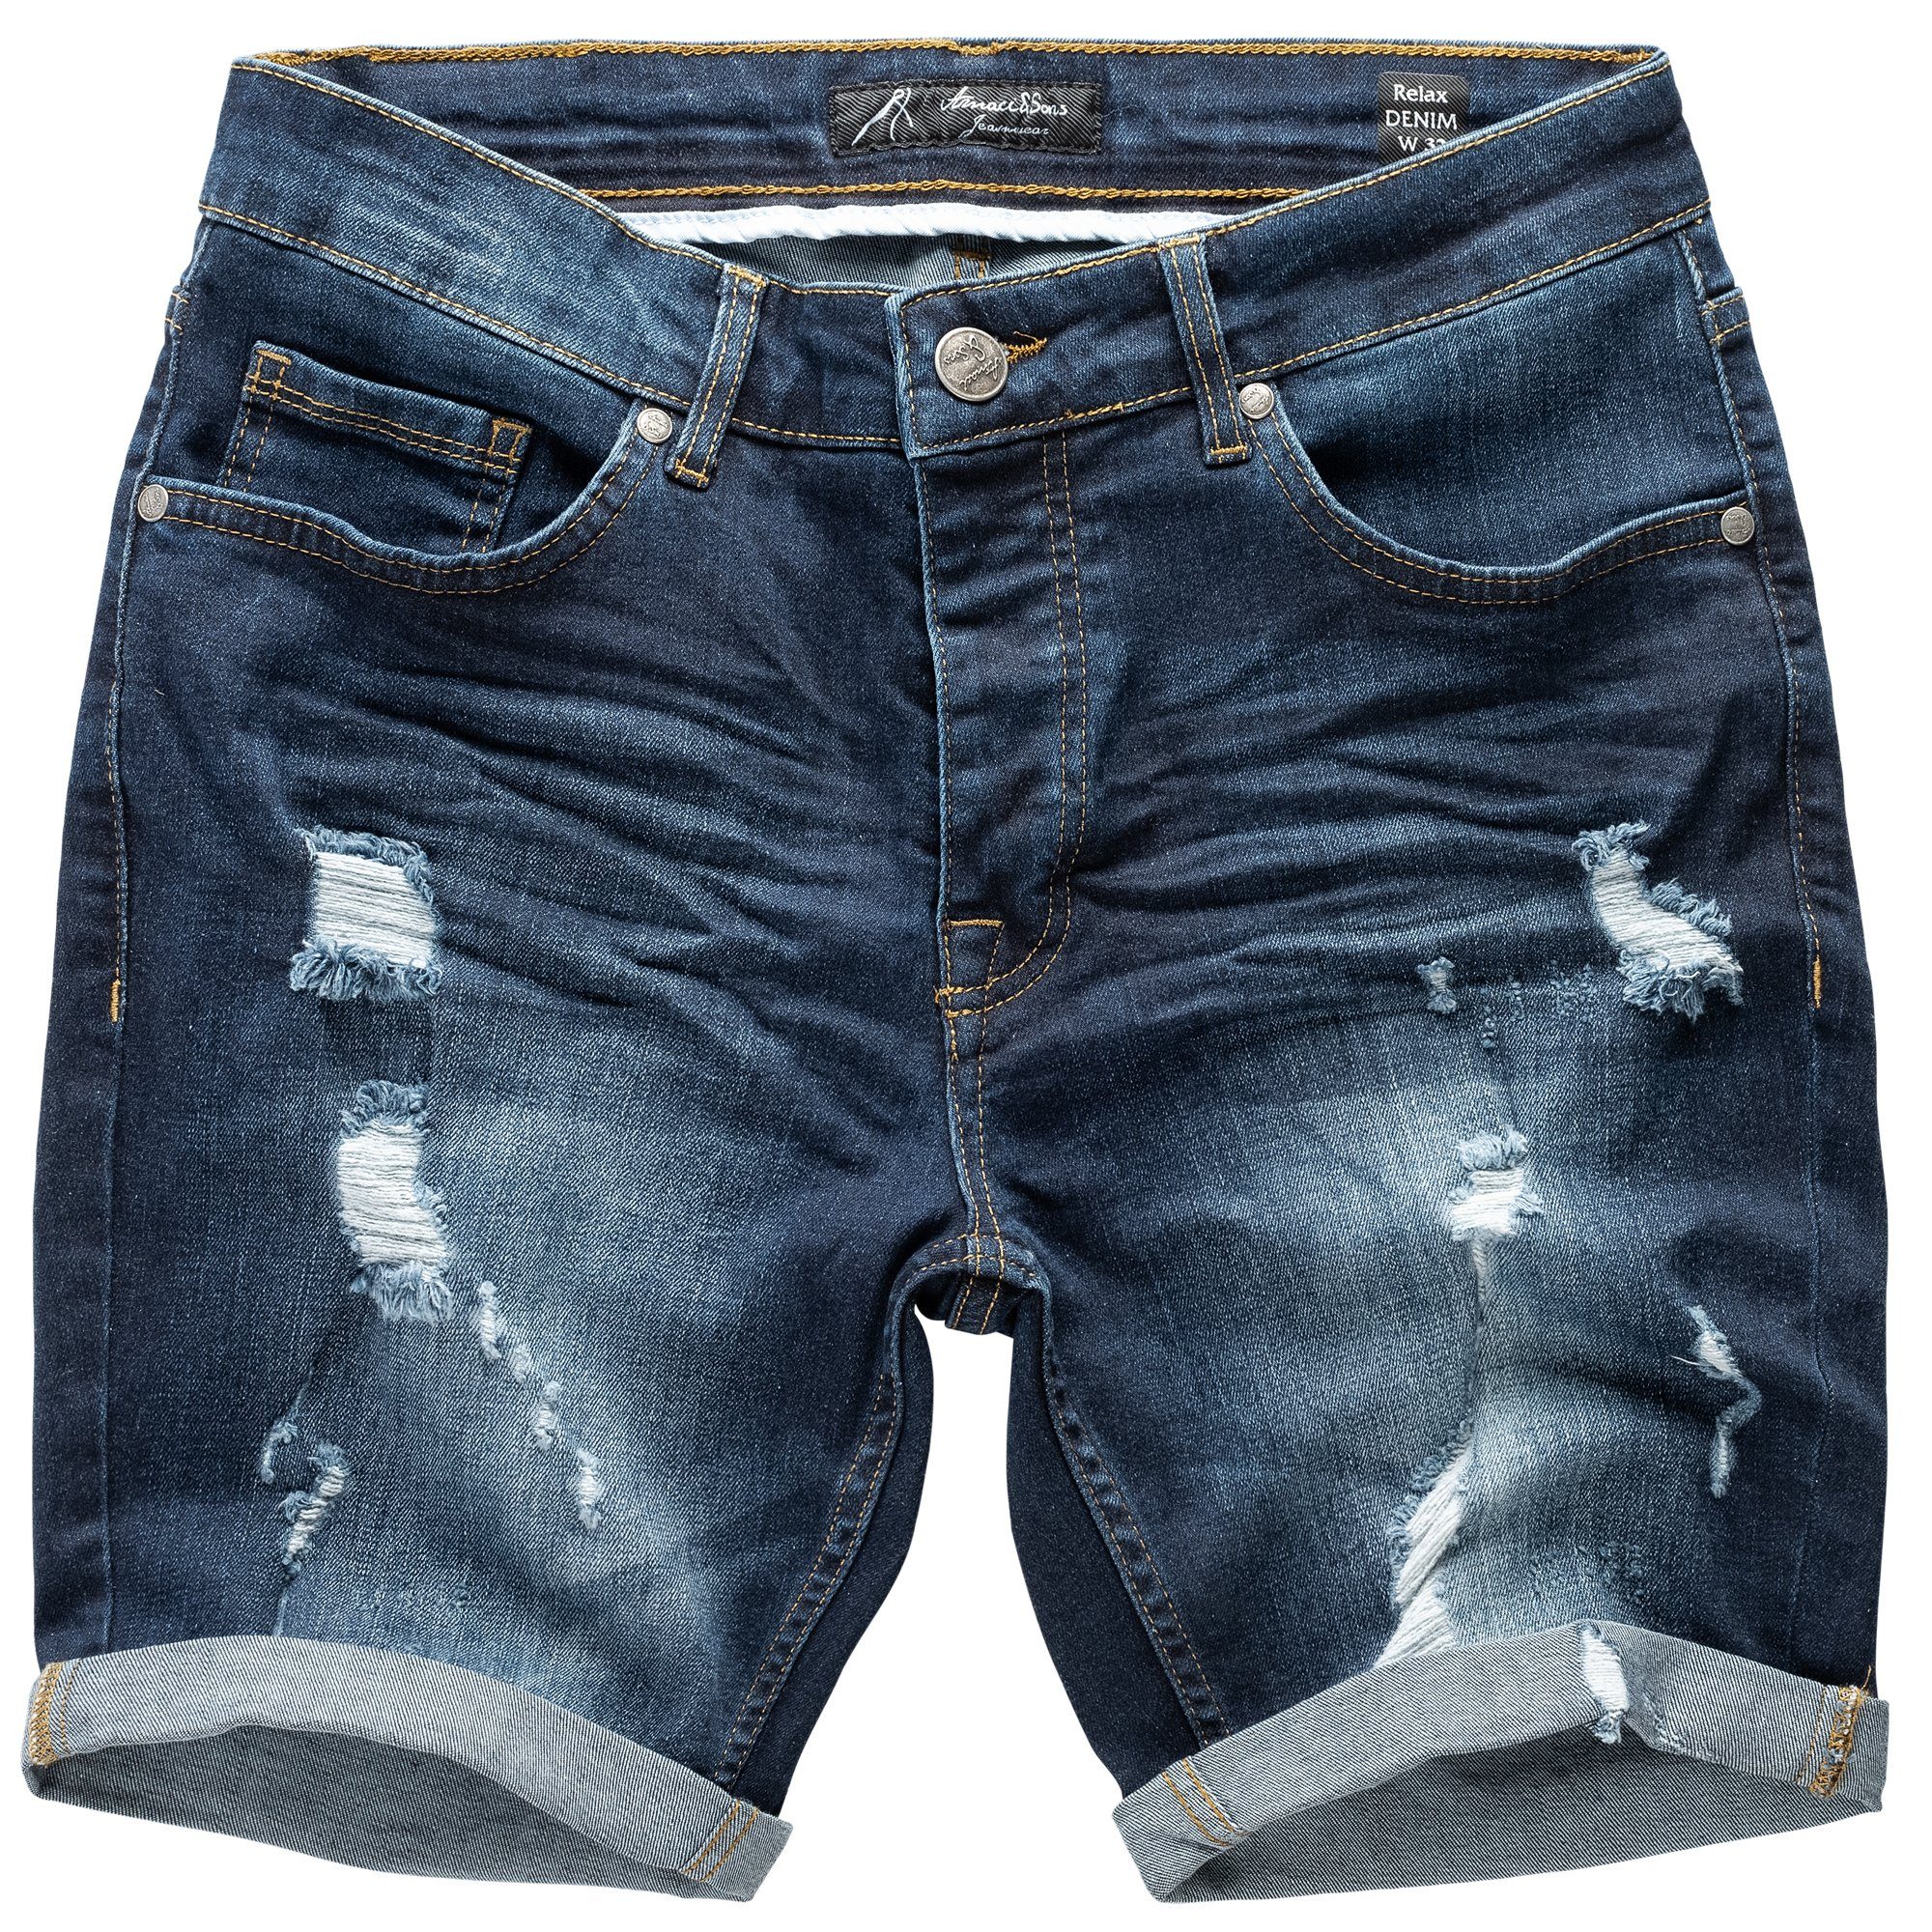 Amaci&Sons Jeansshorts Destroyed SAN Dunkelblau DIEGO Shorts Jeans